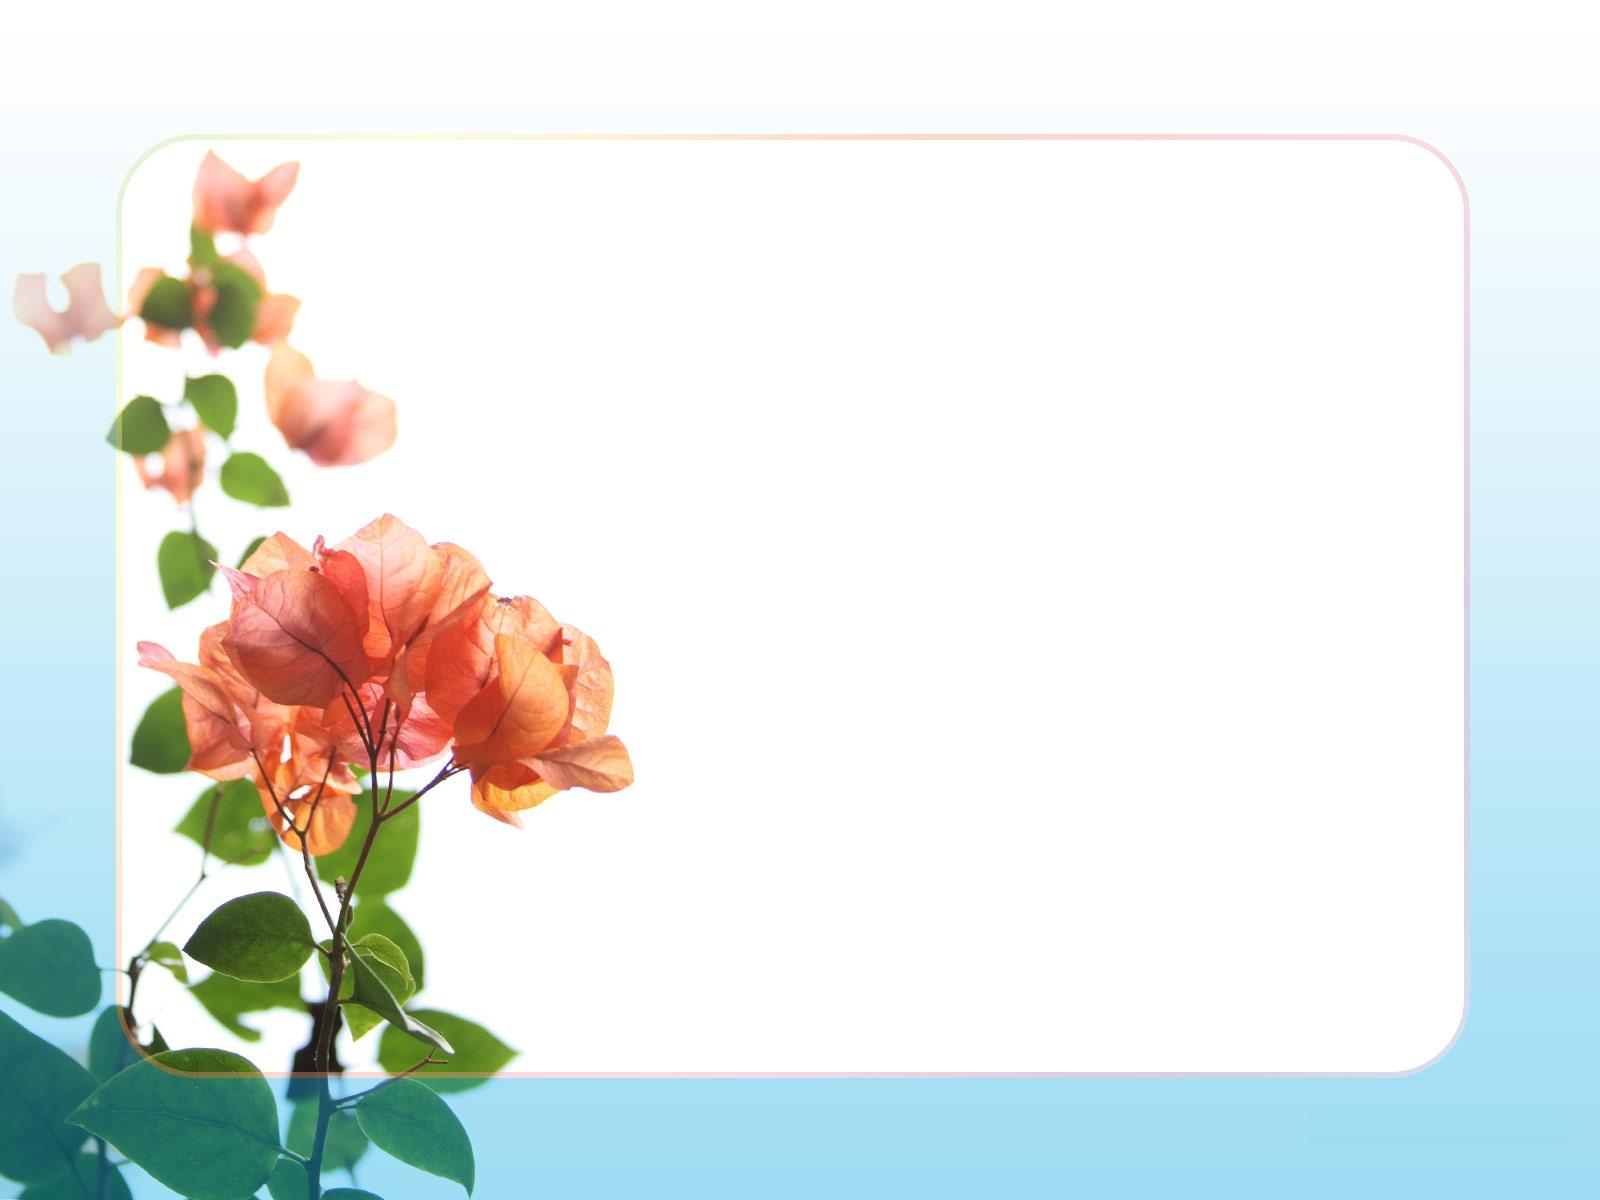 Free Flower Border Image, Download Free Flower Border Image png image, Free ClipArts on Clipart Library